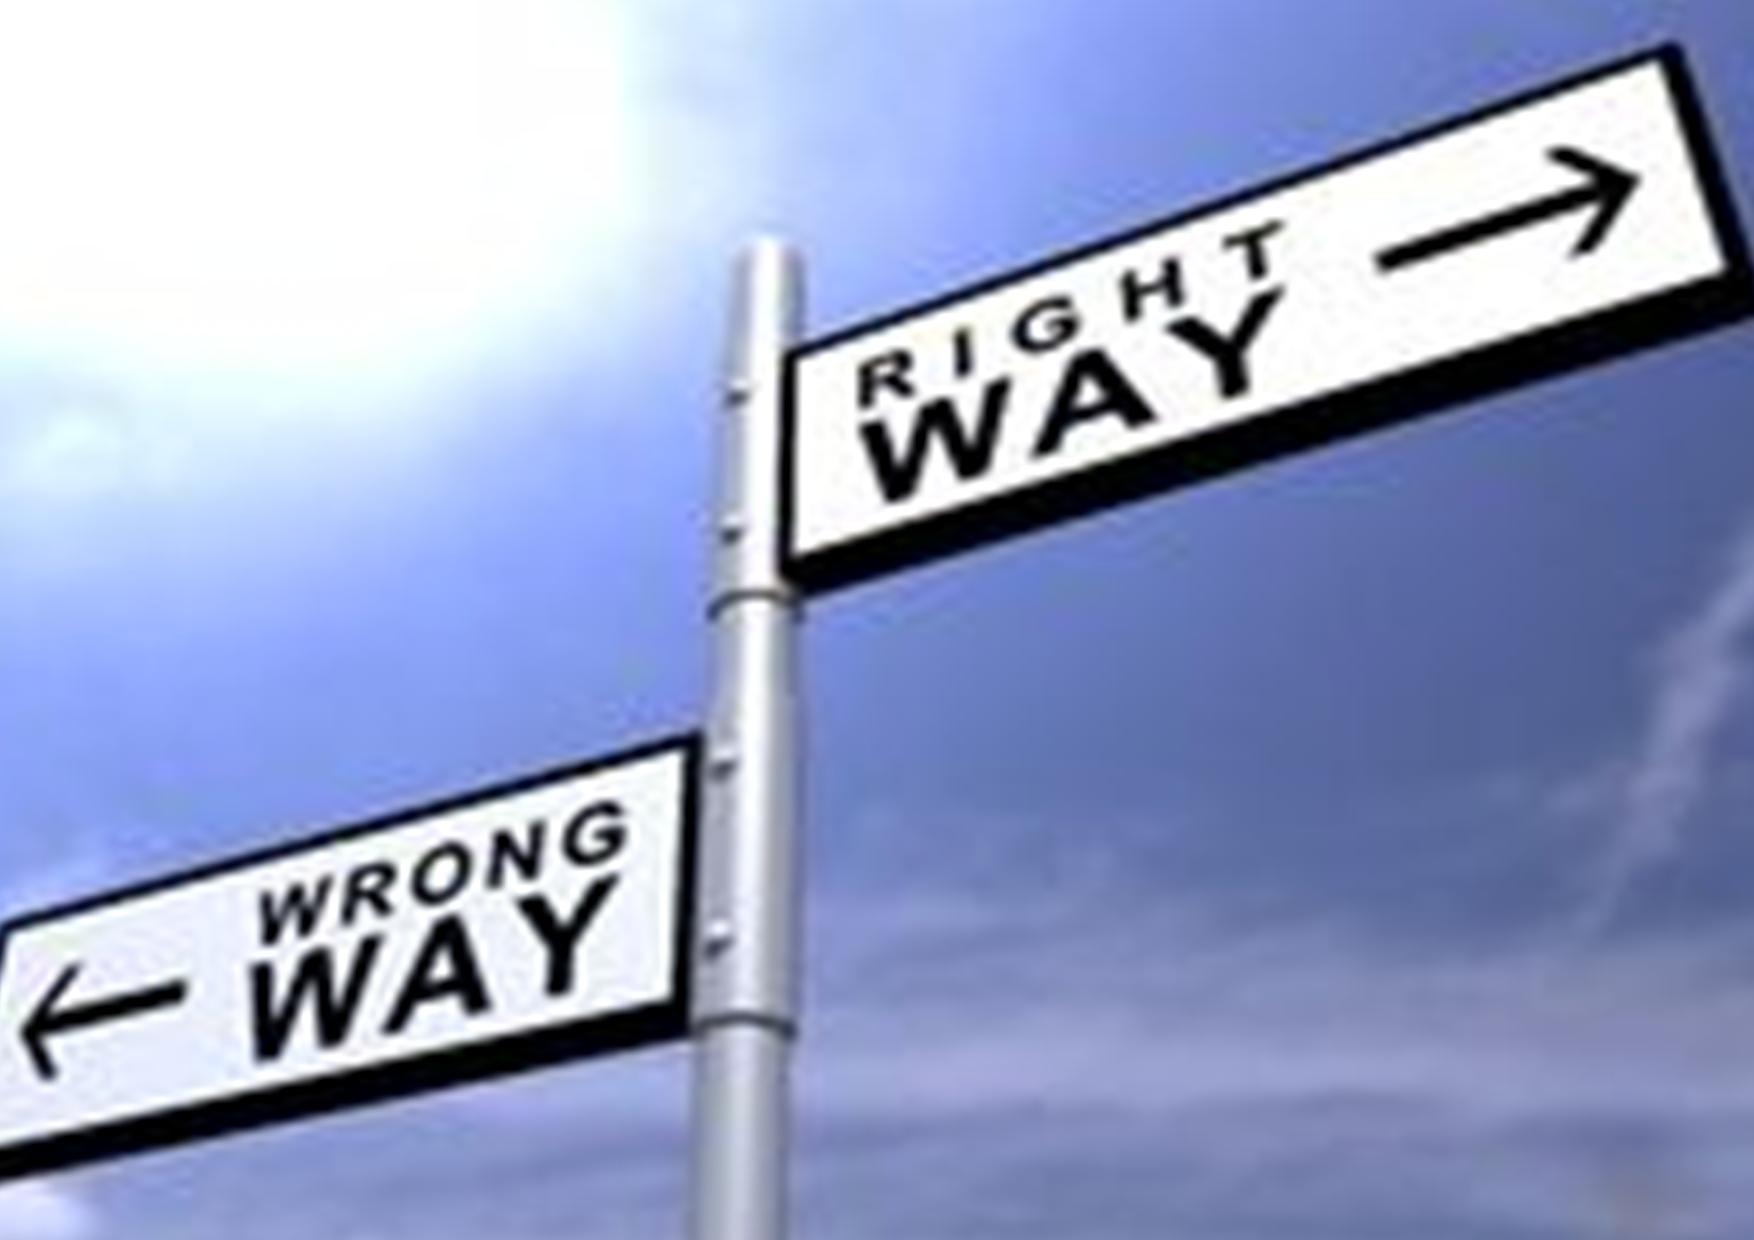 Right or Wrong way